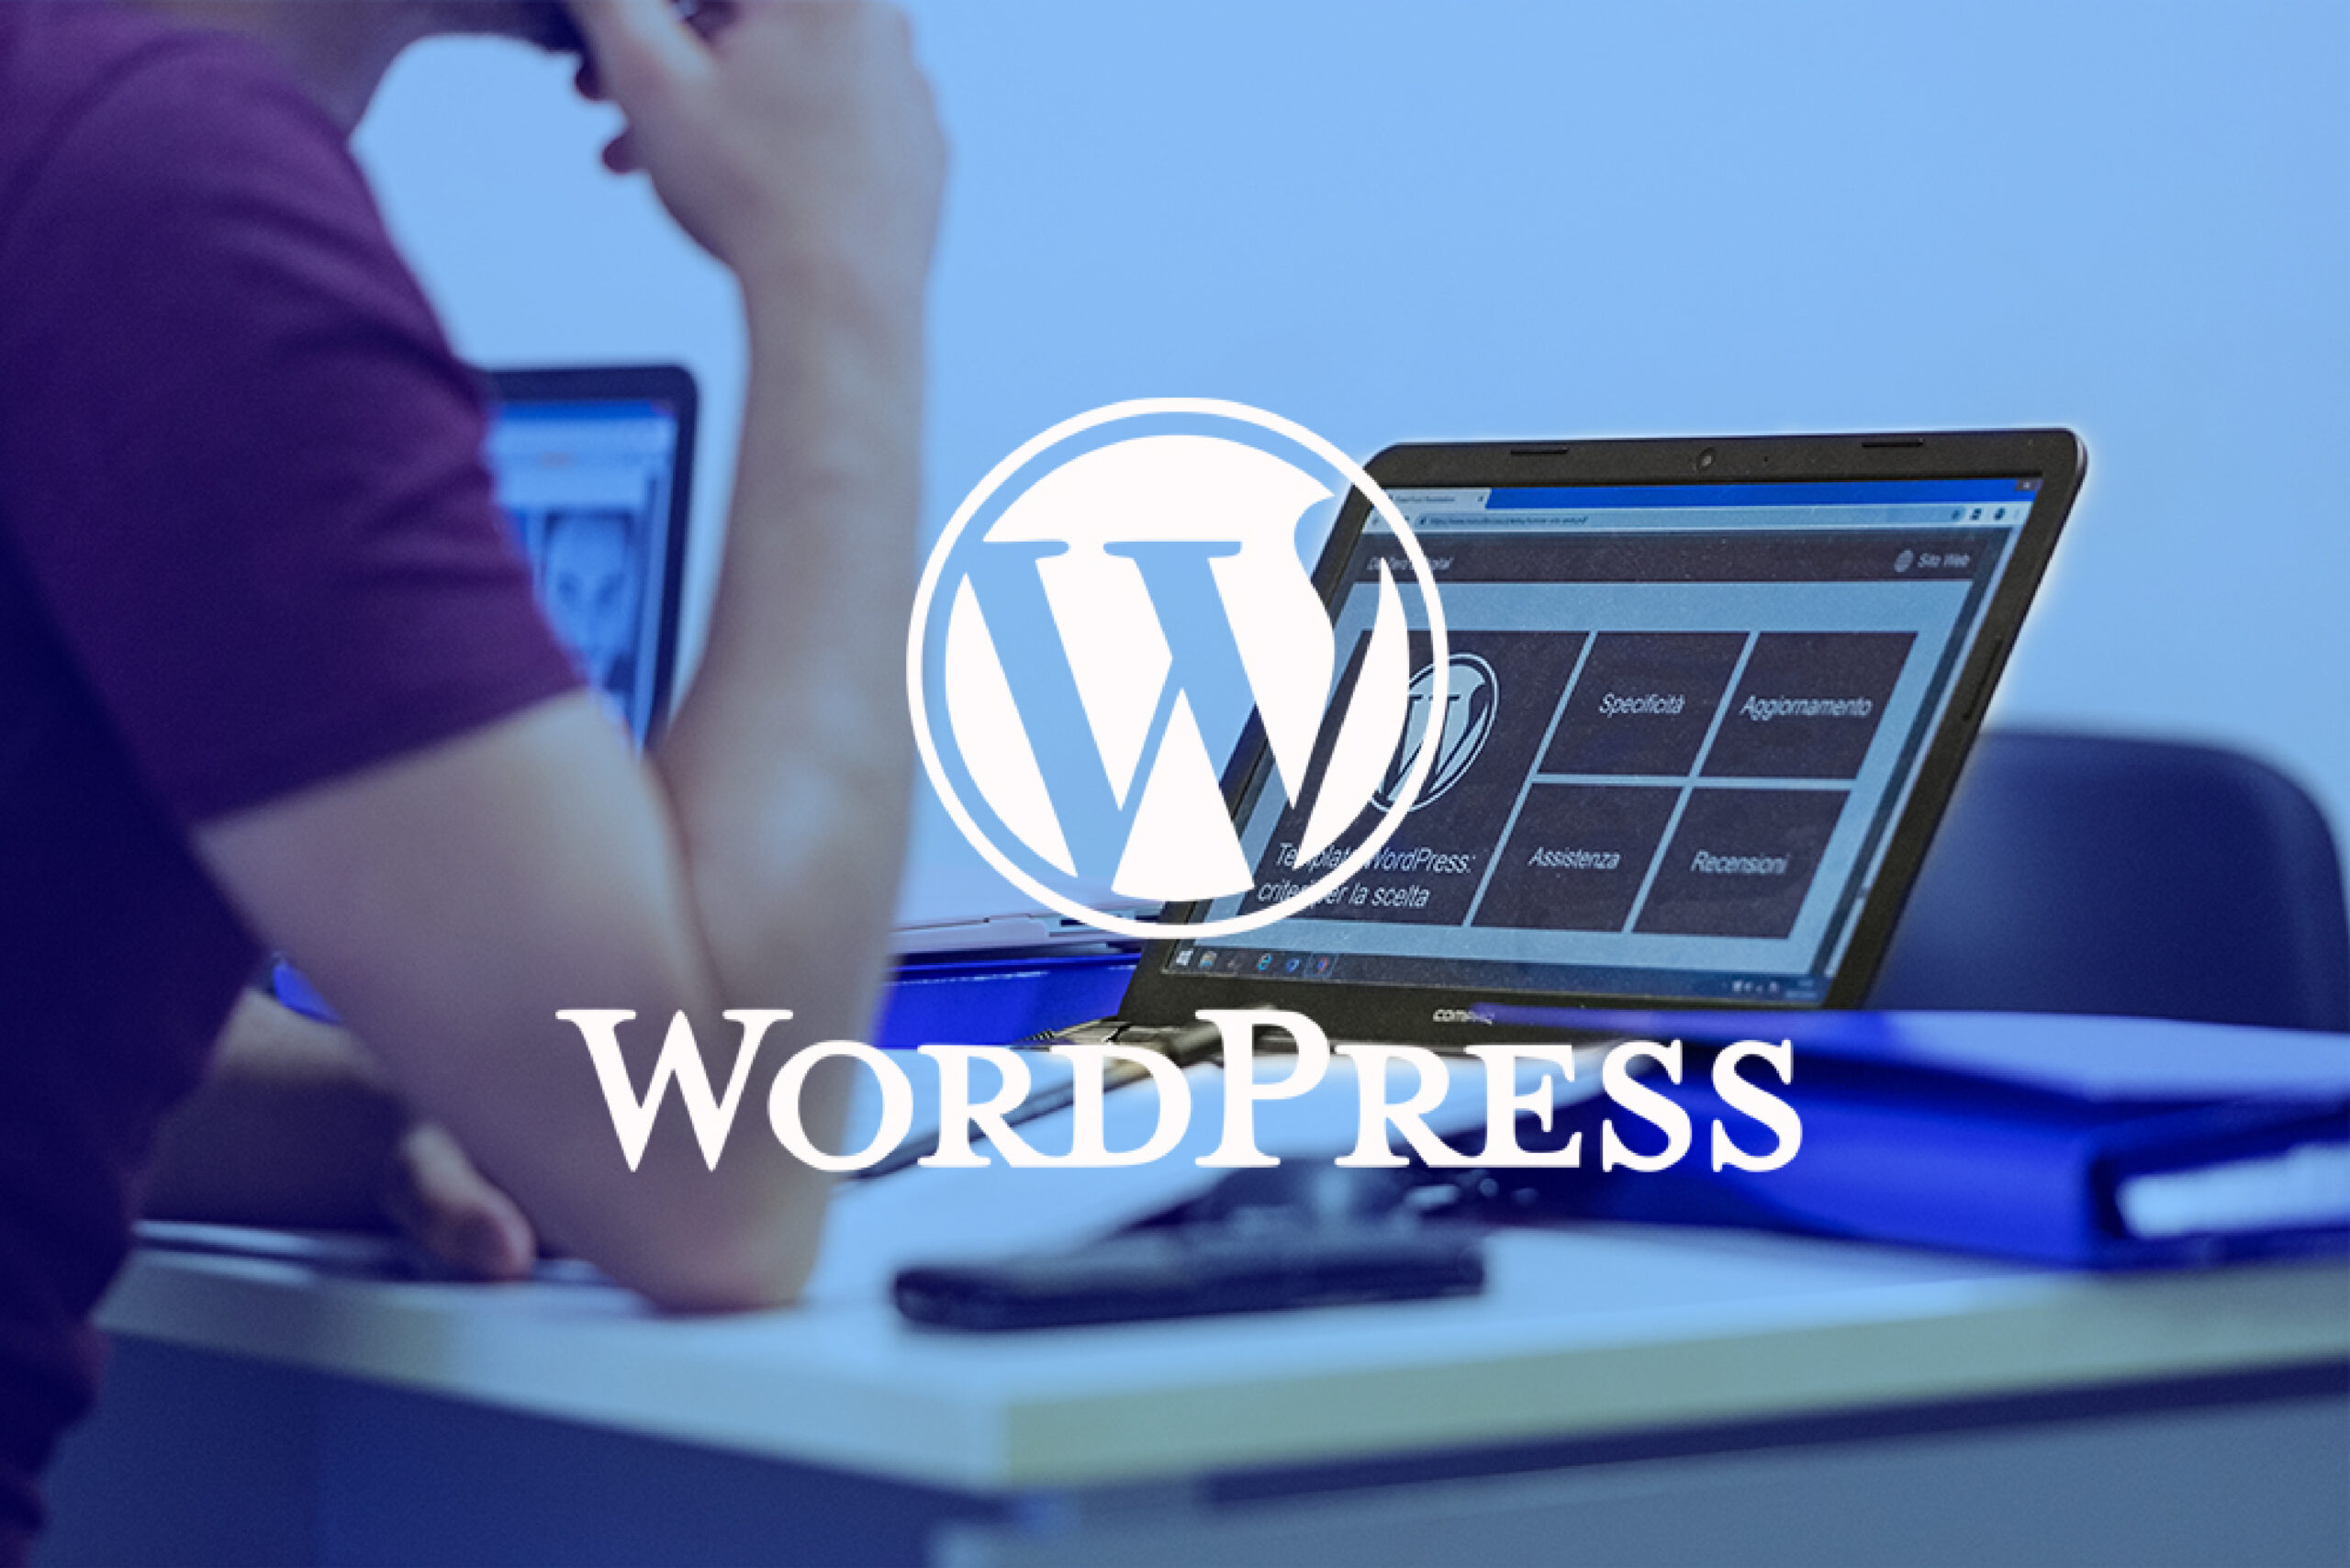 Word Press|Accessibility mode|WordPress additional widgets|Add Widgets areas to Theme|Add WordPress Widgets|WordPress Widgets categories|Conclusion|WordPress widget delete|Side bar|WordPress Accessibility|WordPress Widgets|WordPress Widget